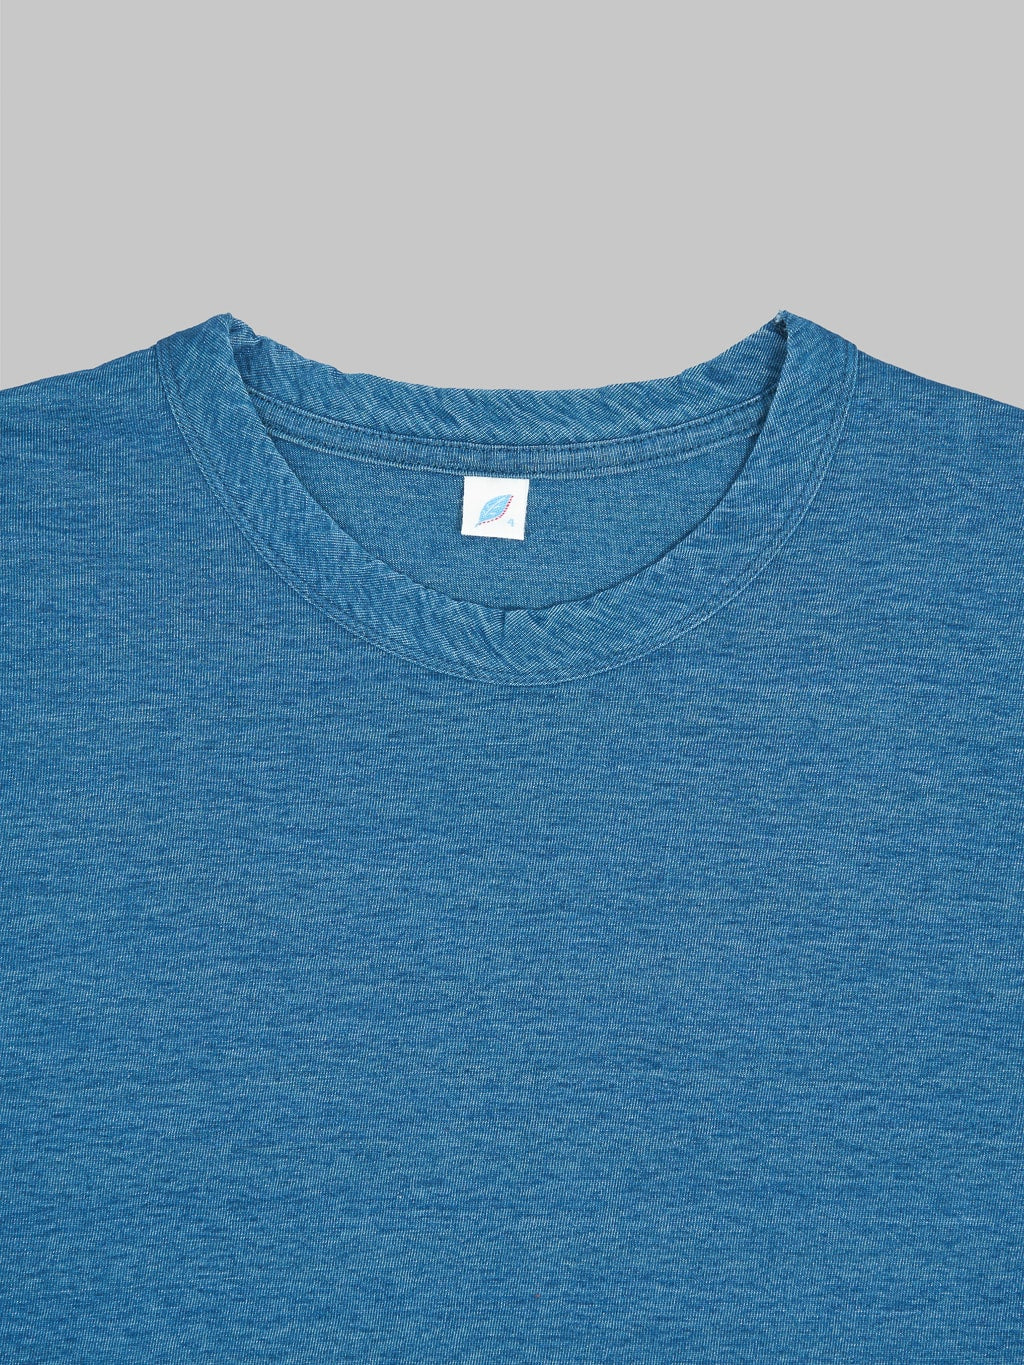 pure blue japan greencast tshirt chest detail